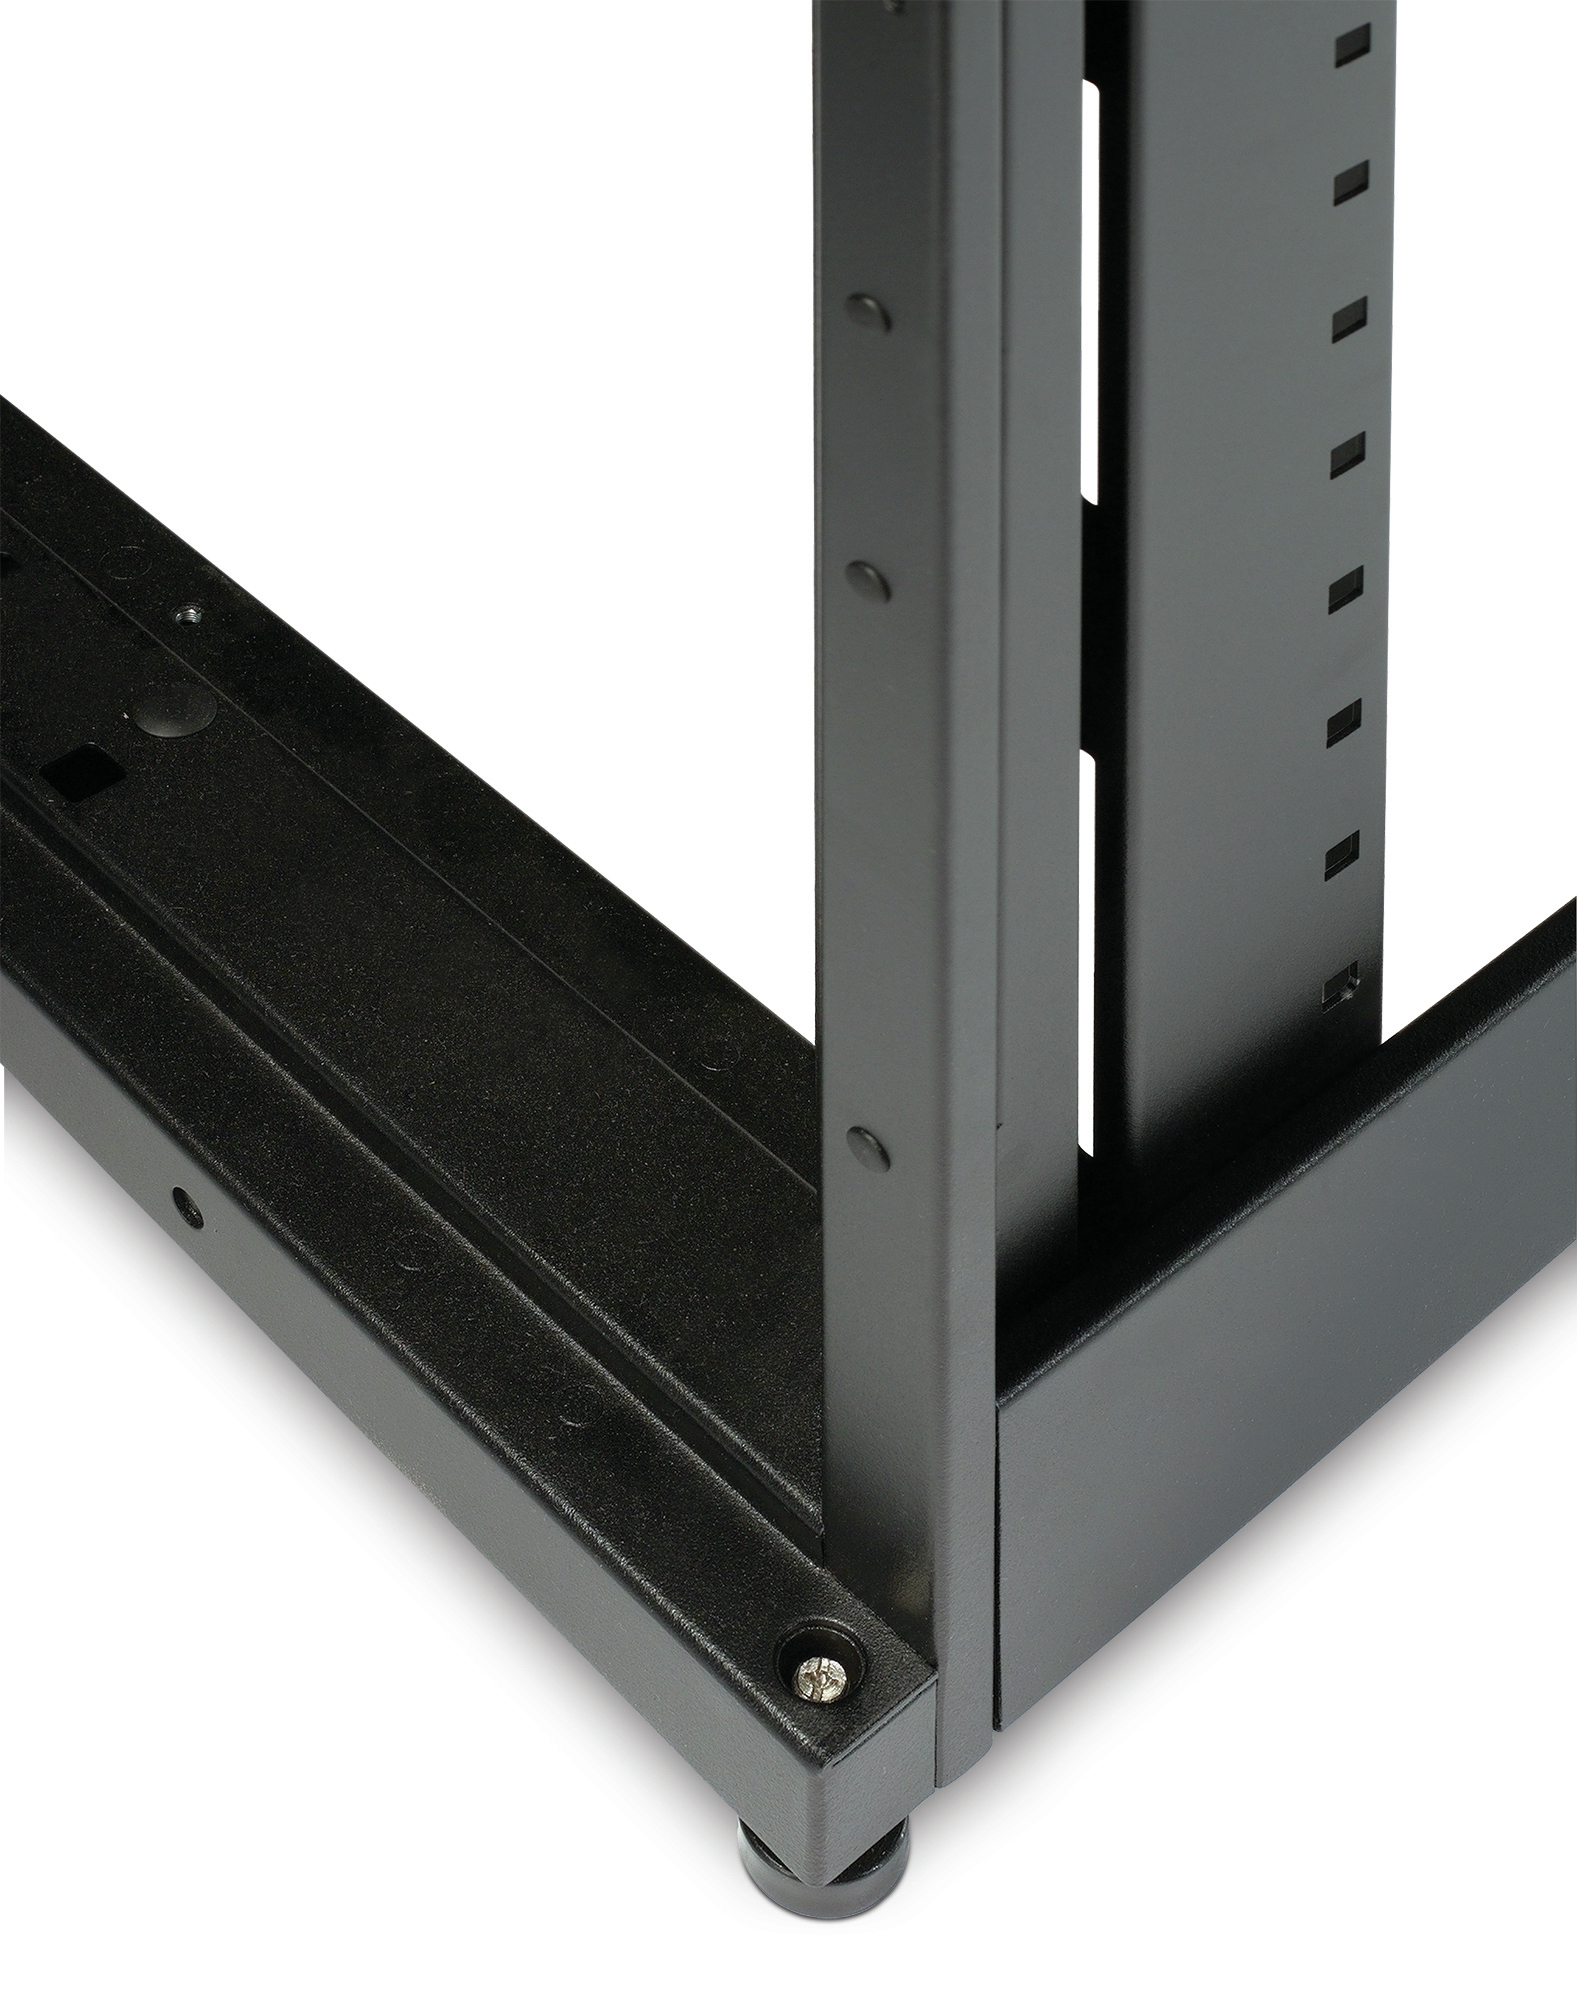 APC NetShelter SX 42U 600mm Wide x 1070mm Deep Enclosure with Sides Black Freestanding rack